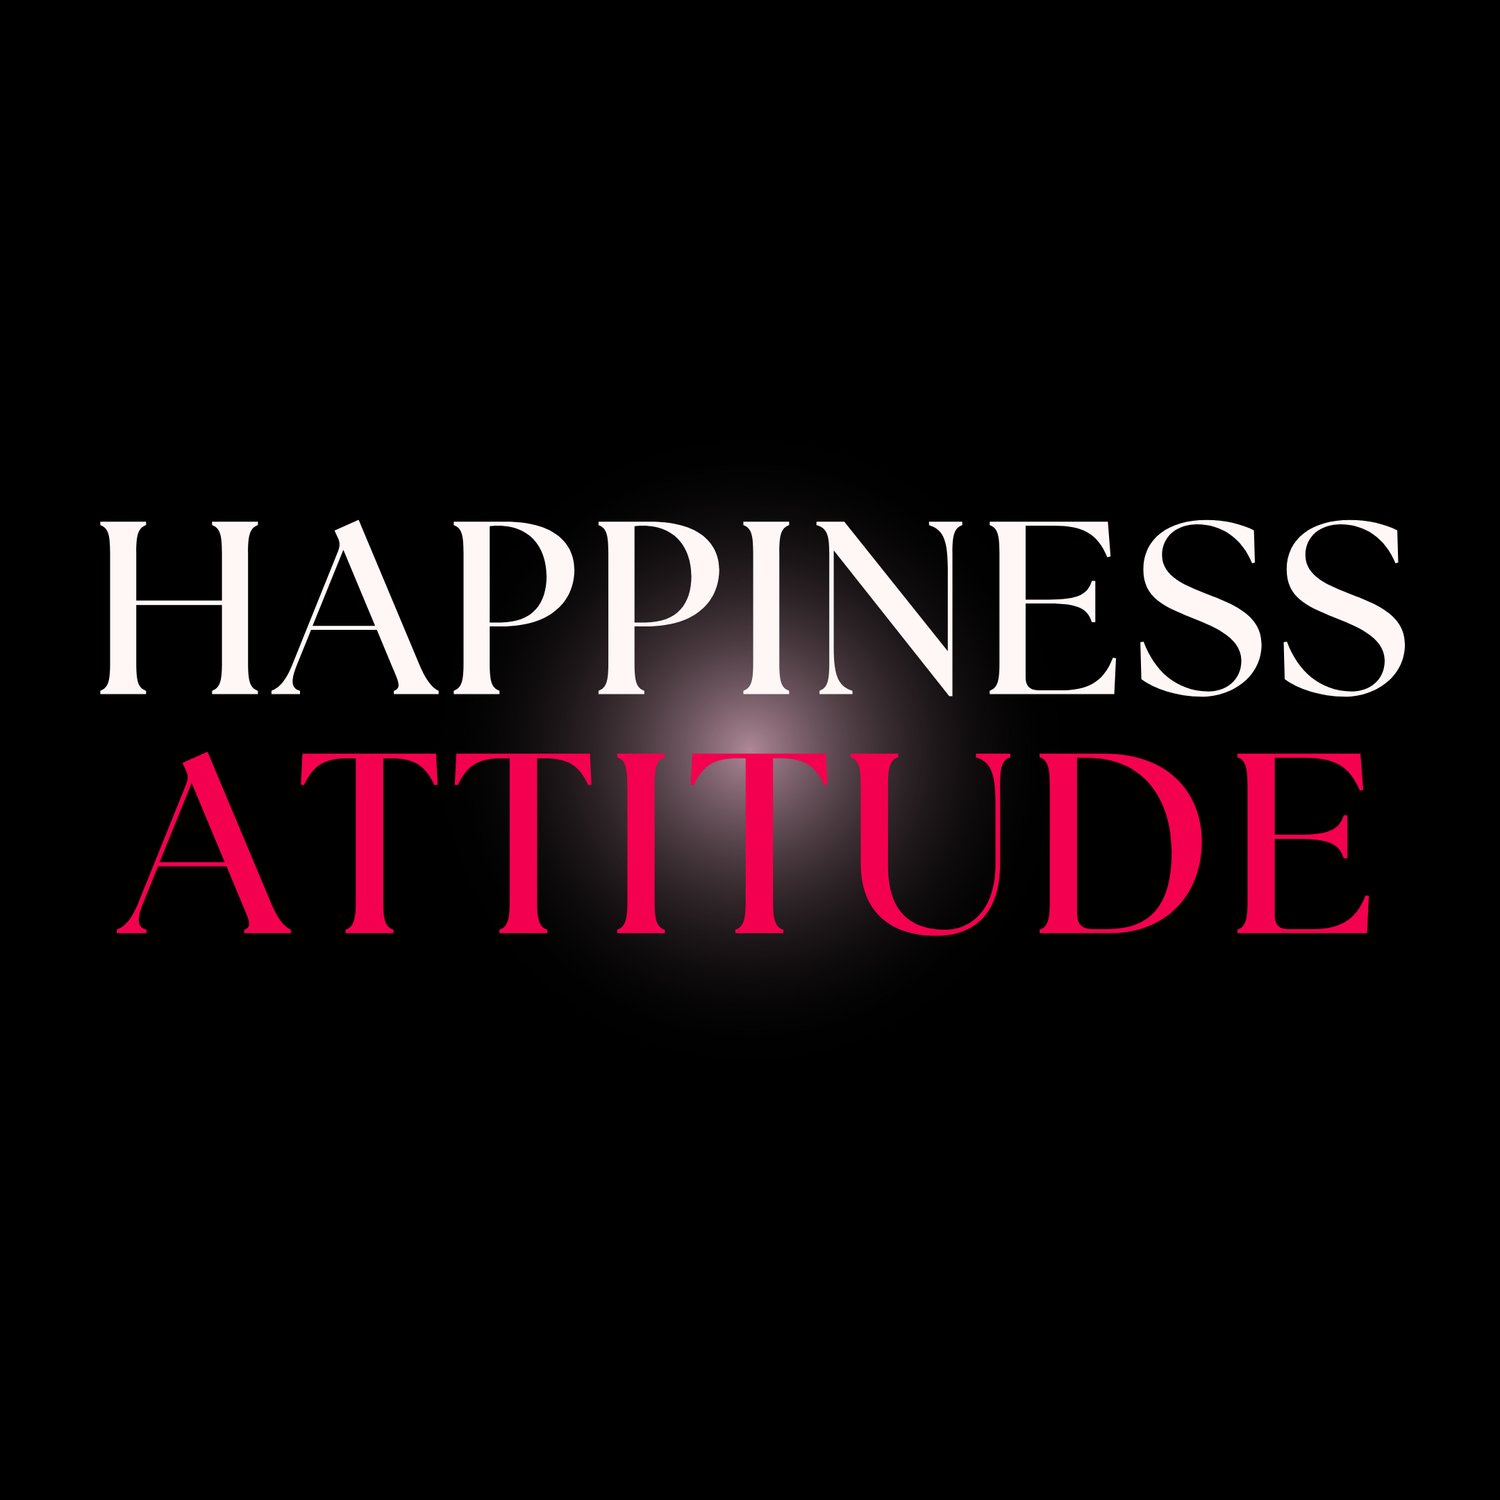 HAPPINESS ATTITUDE